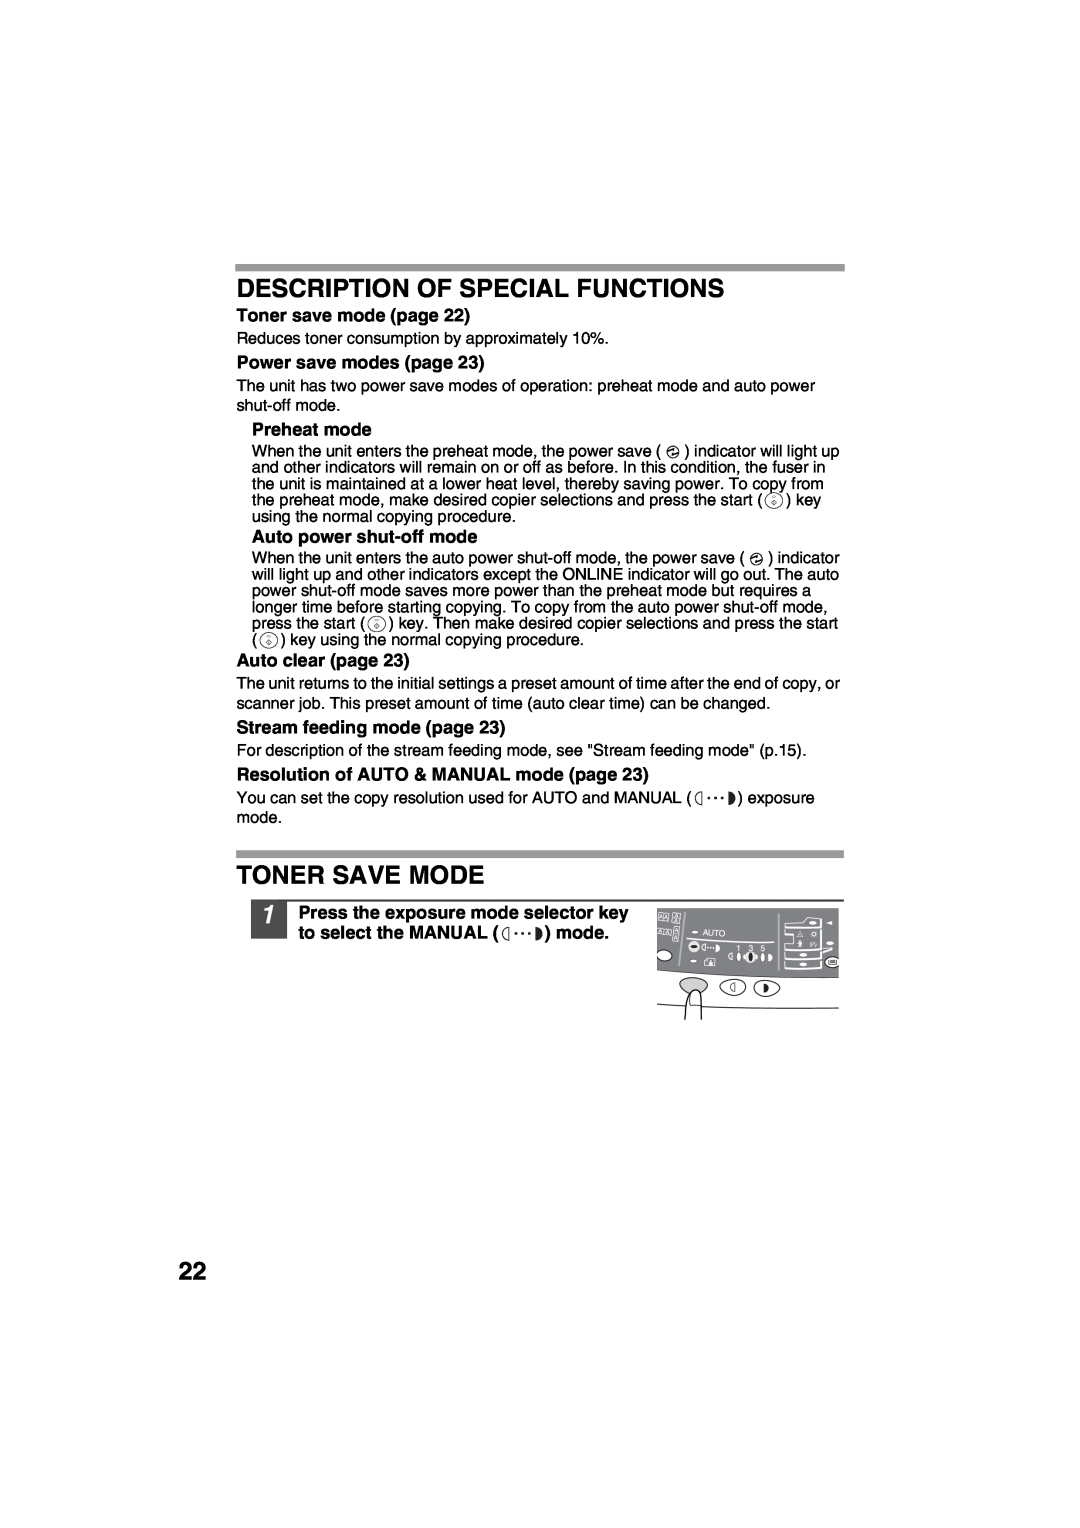 Sharp AR-153E Description Of Special Functions, Toner Save Mode, Toner save mode page, Power save modes page, Preheat mode 